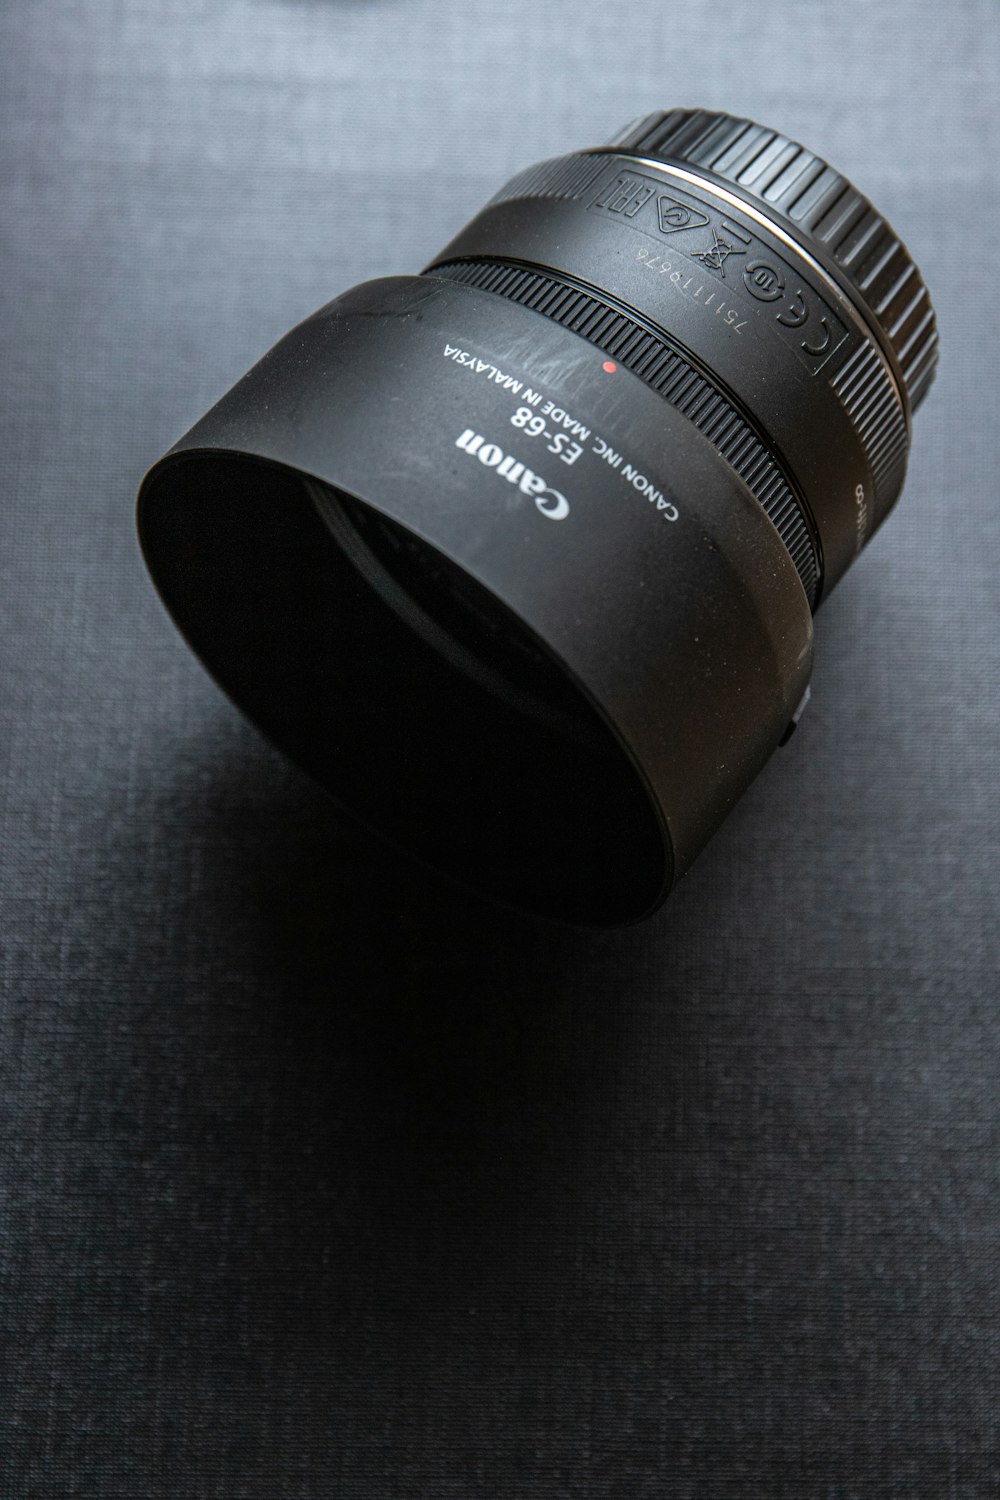 black camera lens on white textile